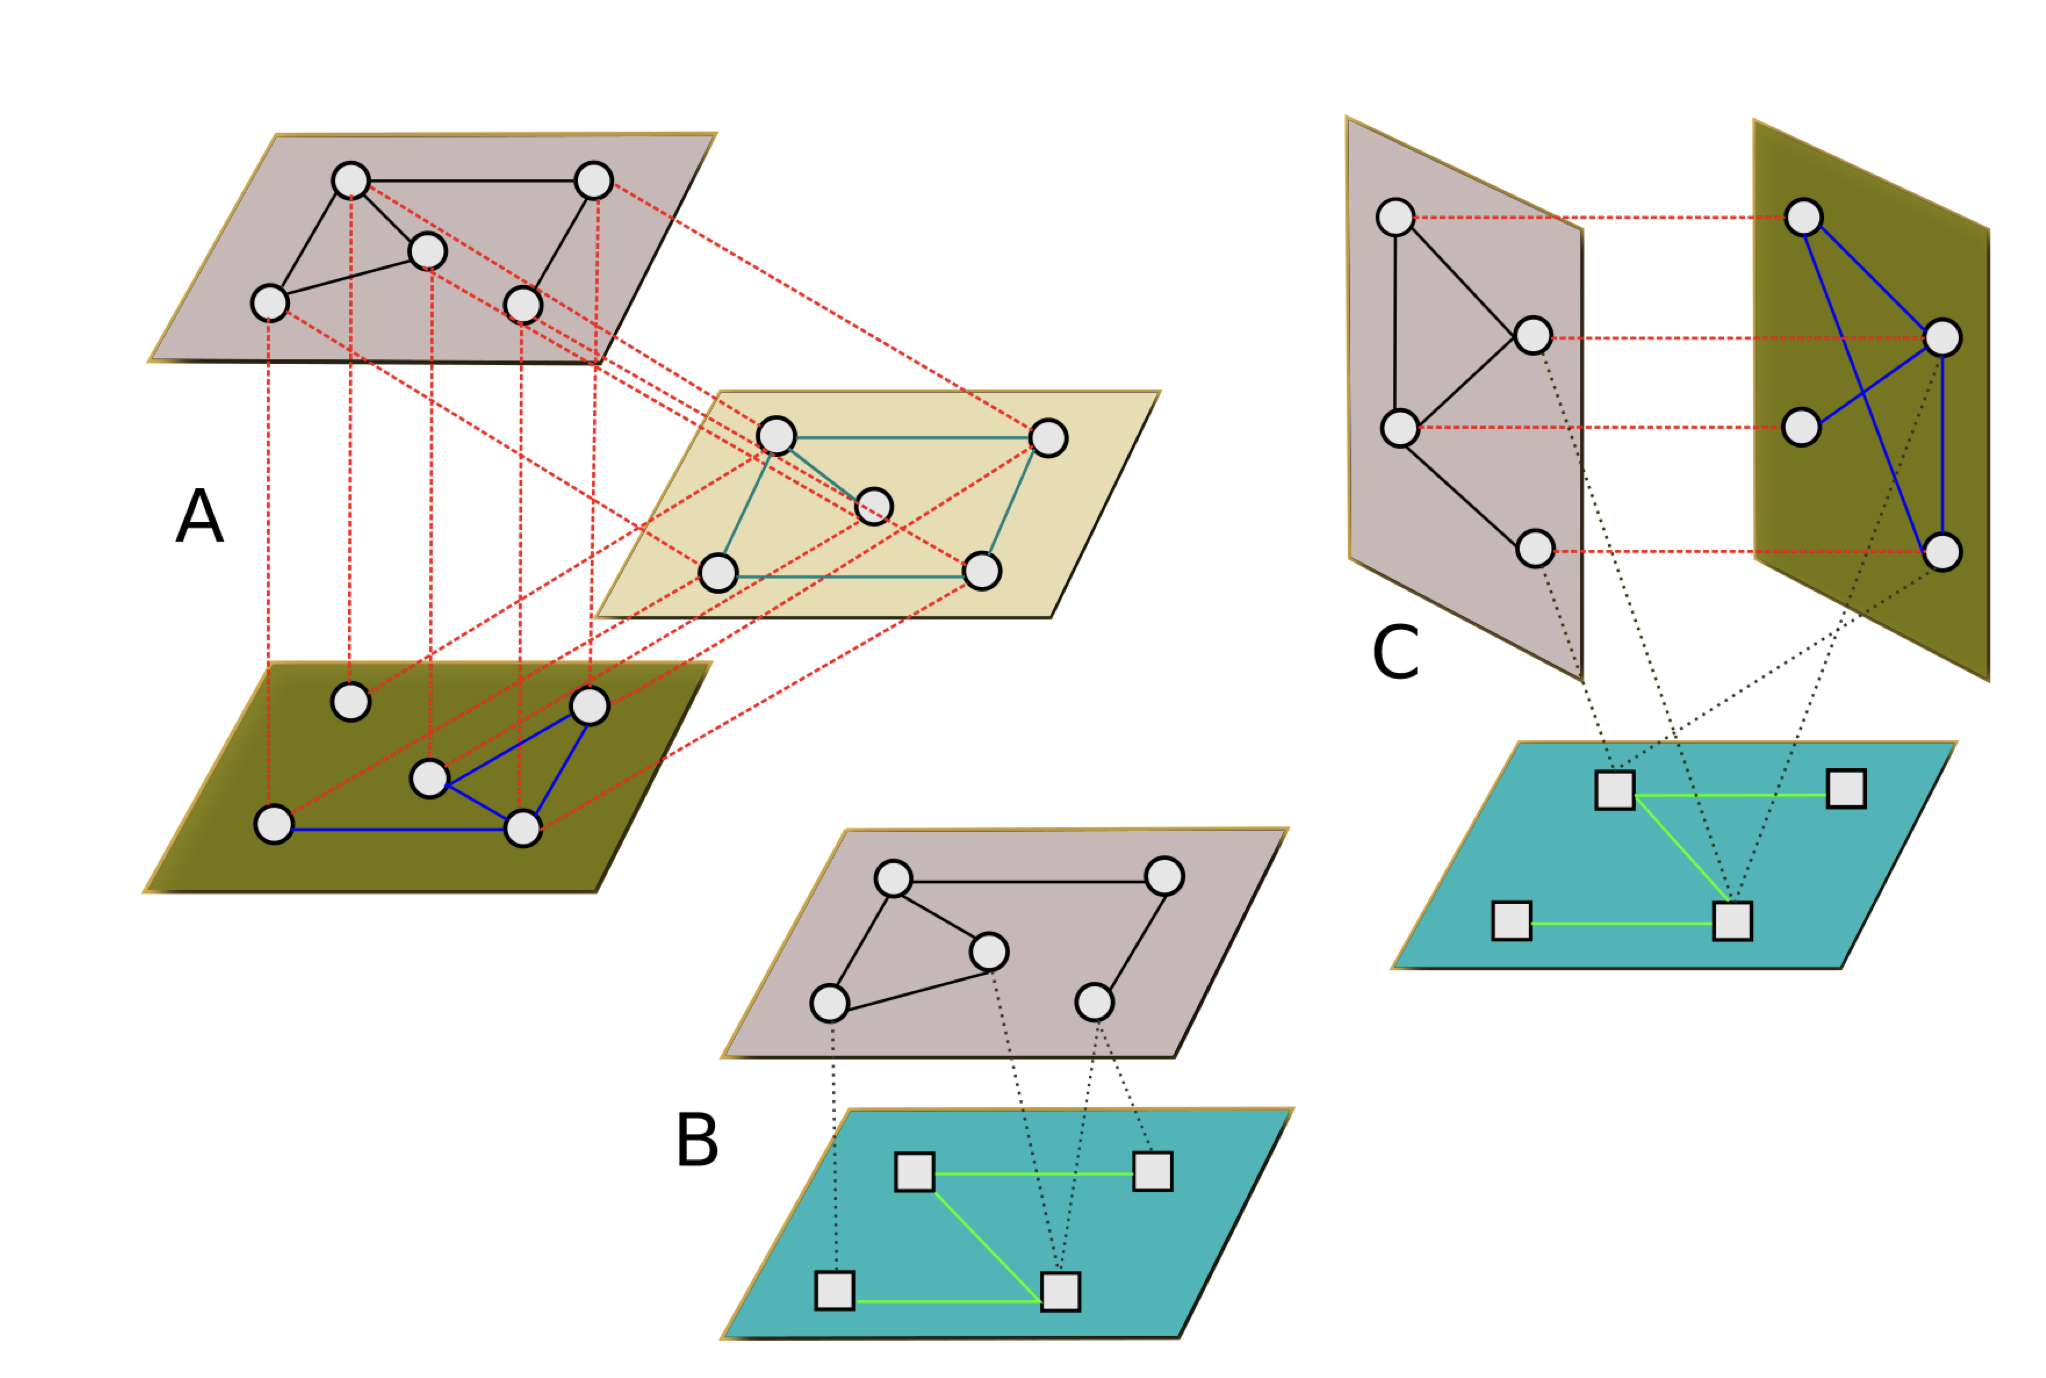 Exemple of Multiplex, Heterogeneous and Multiplex-Heterogeneous graphs